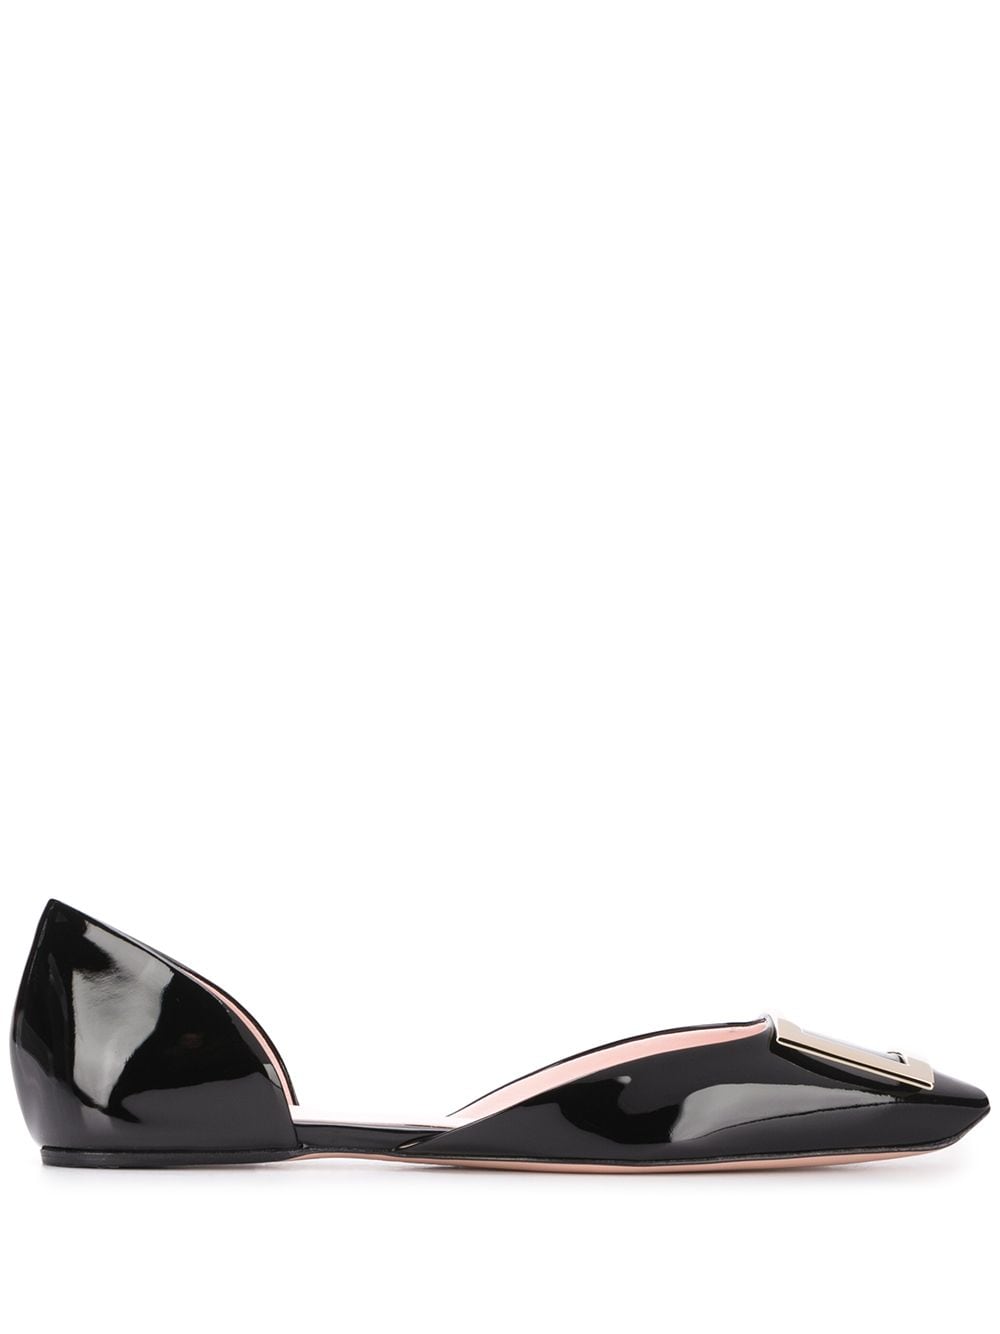 Dorsay Patent Leather Ballet Flats дамски обувки Roger Vivier 842564391_35